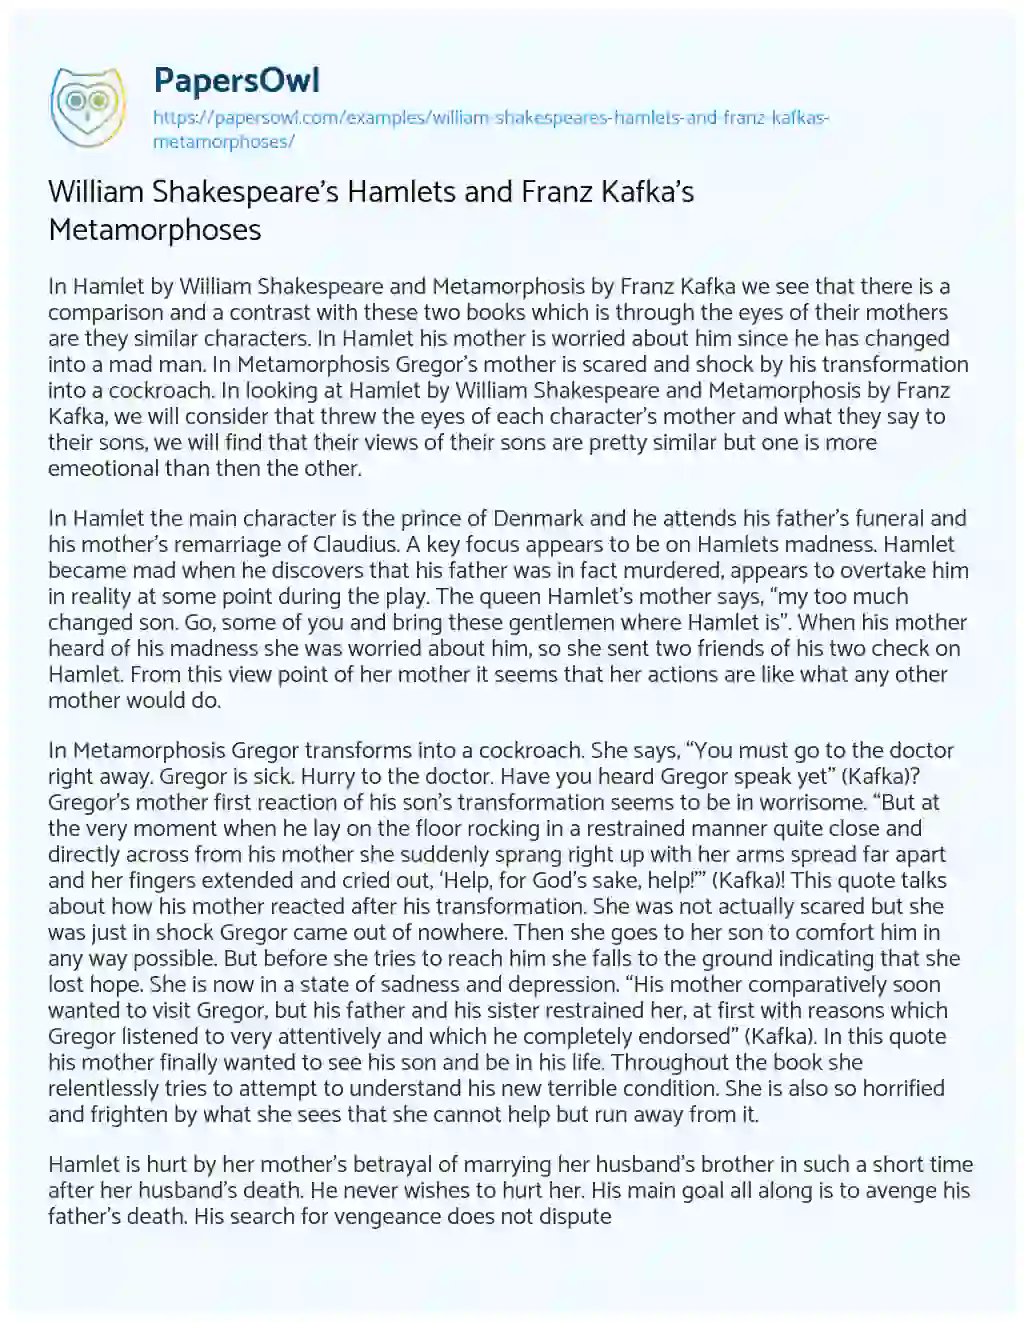 Essay on William Shakespeare’s Hamlets and Franz Kafka’s Metamorphoses